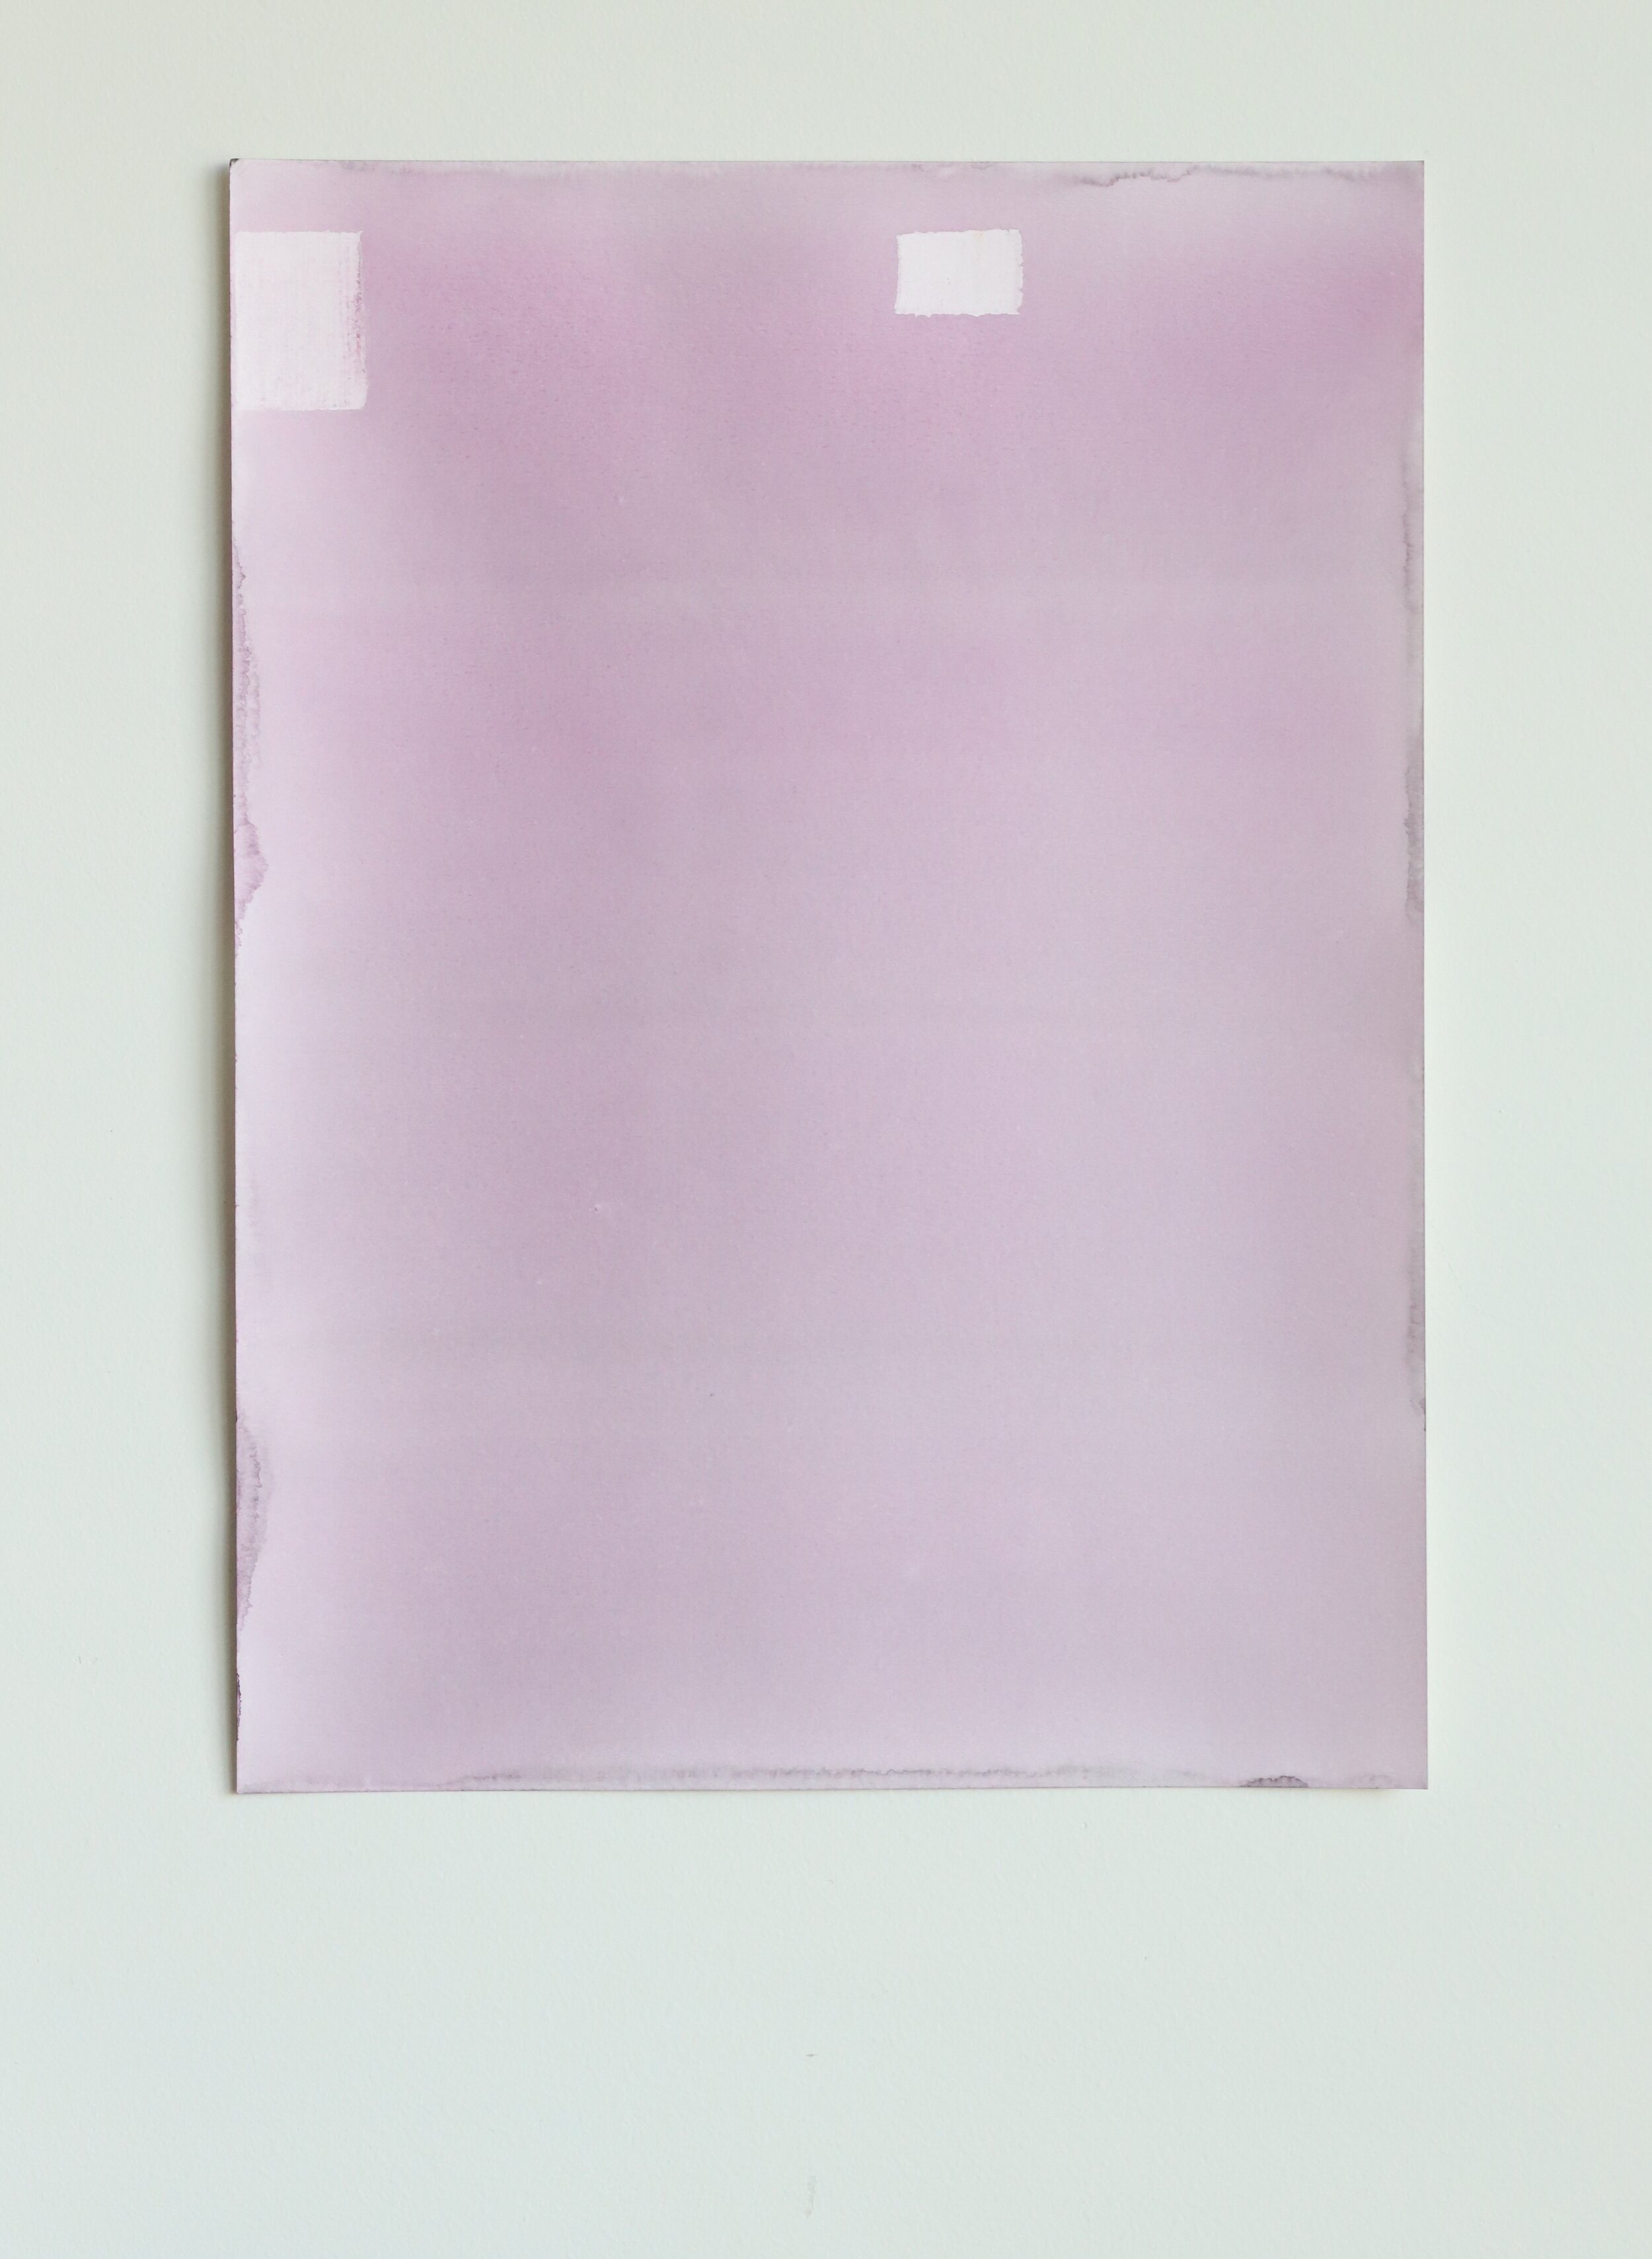  Risen, watercolor on paper, 38x28cm, 2020 